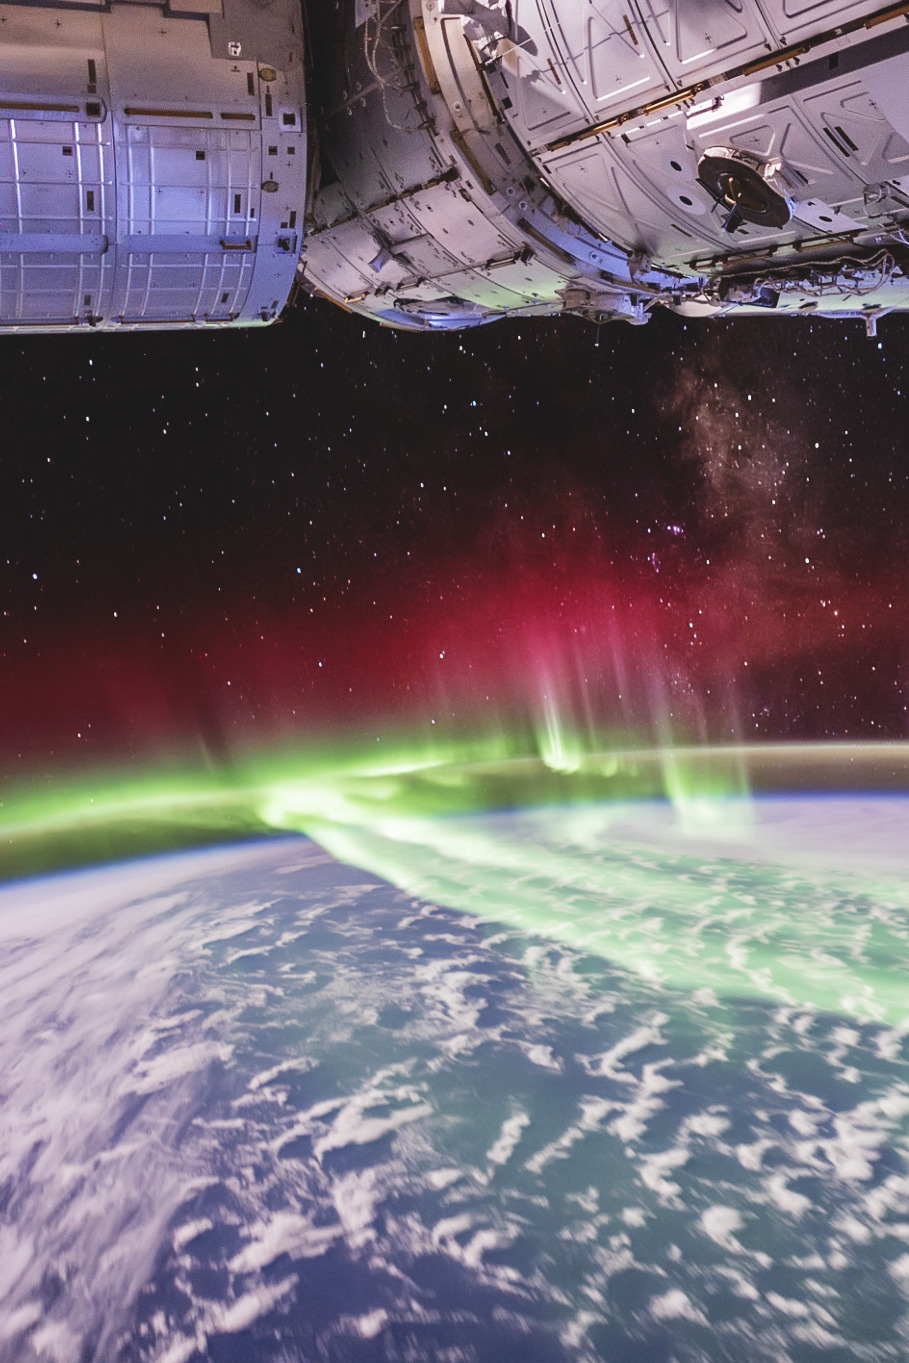 Image via JonathanJScott/NASA Johnson Space Center